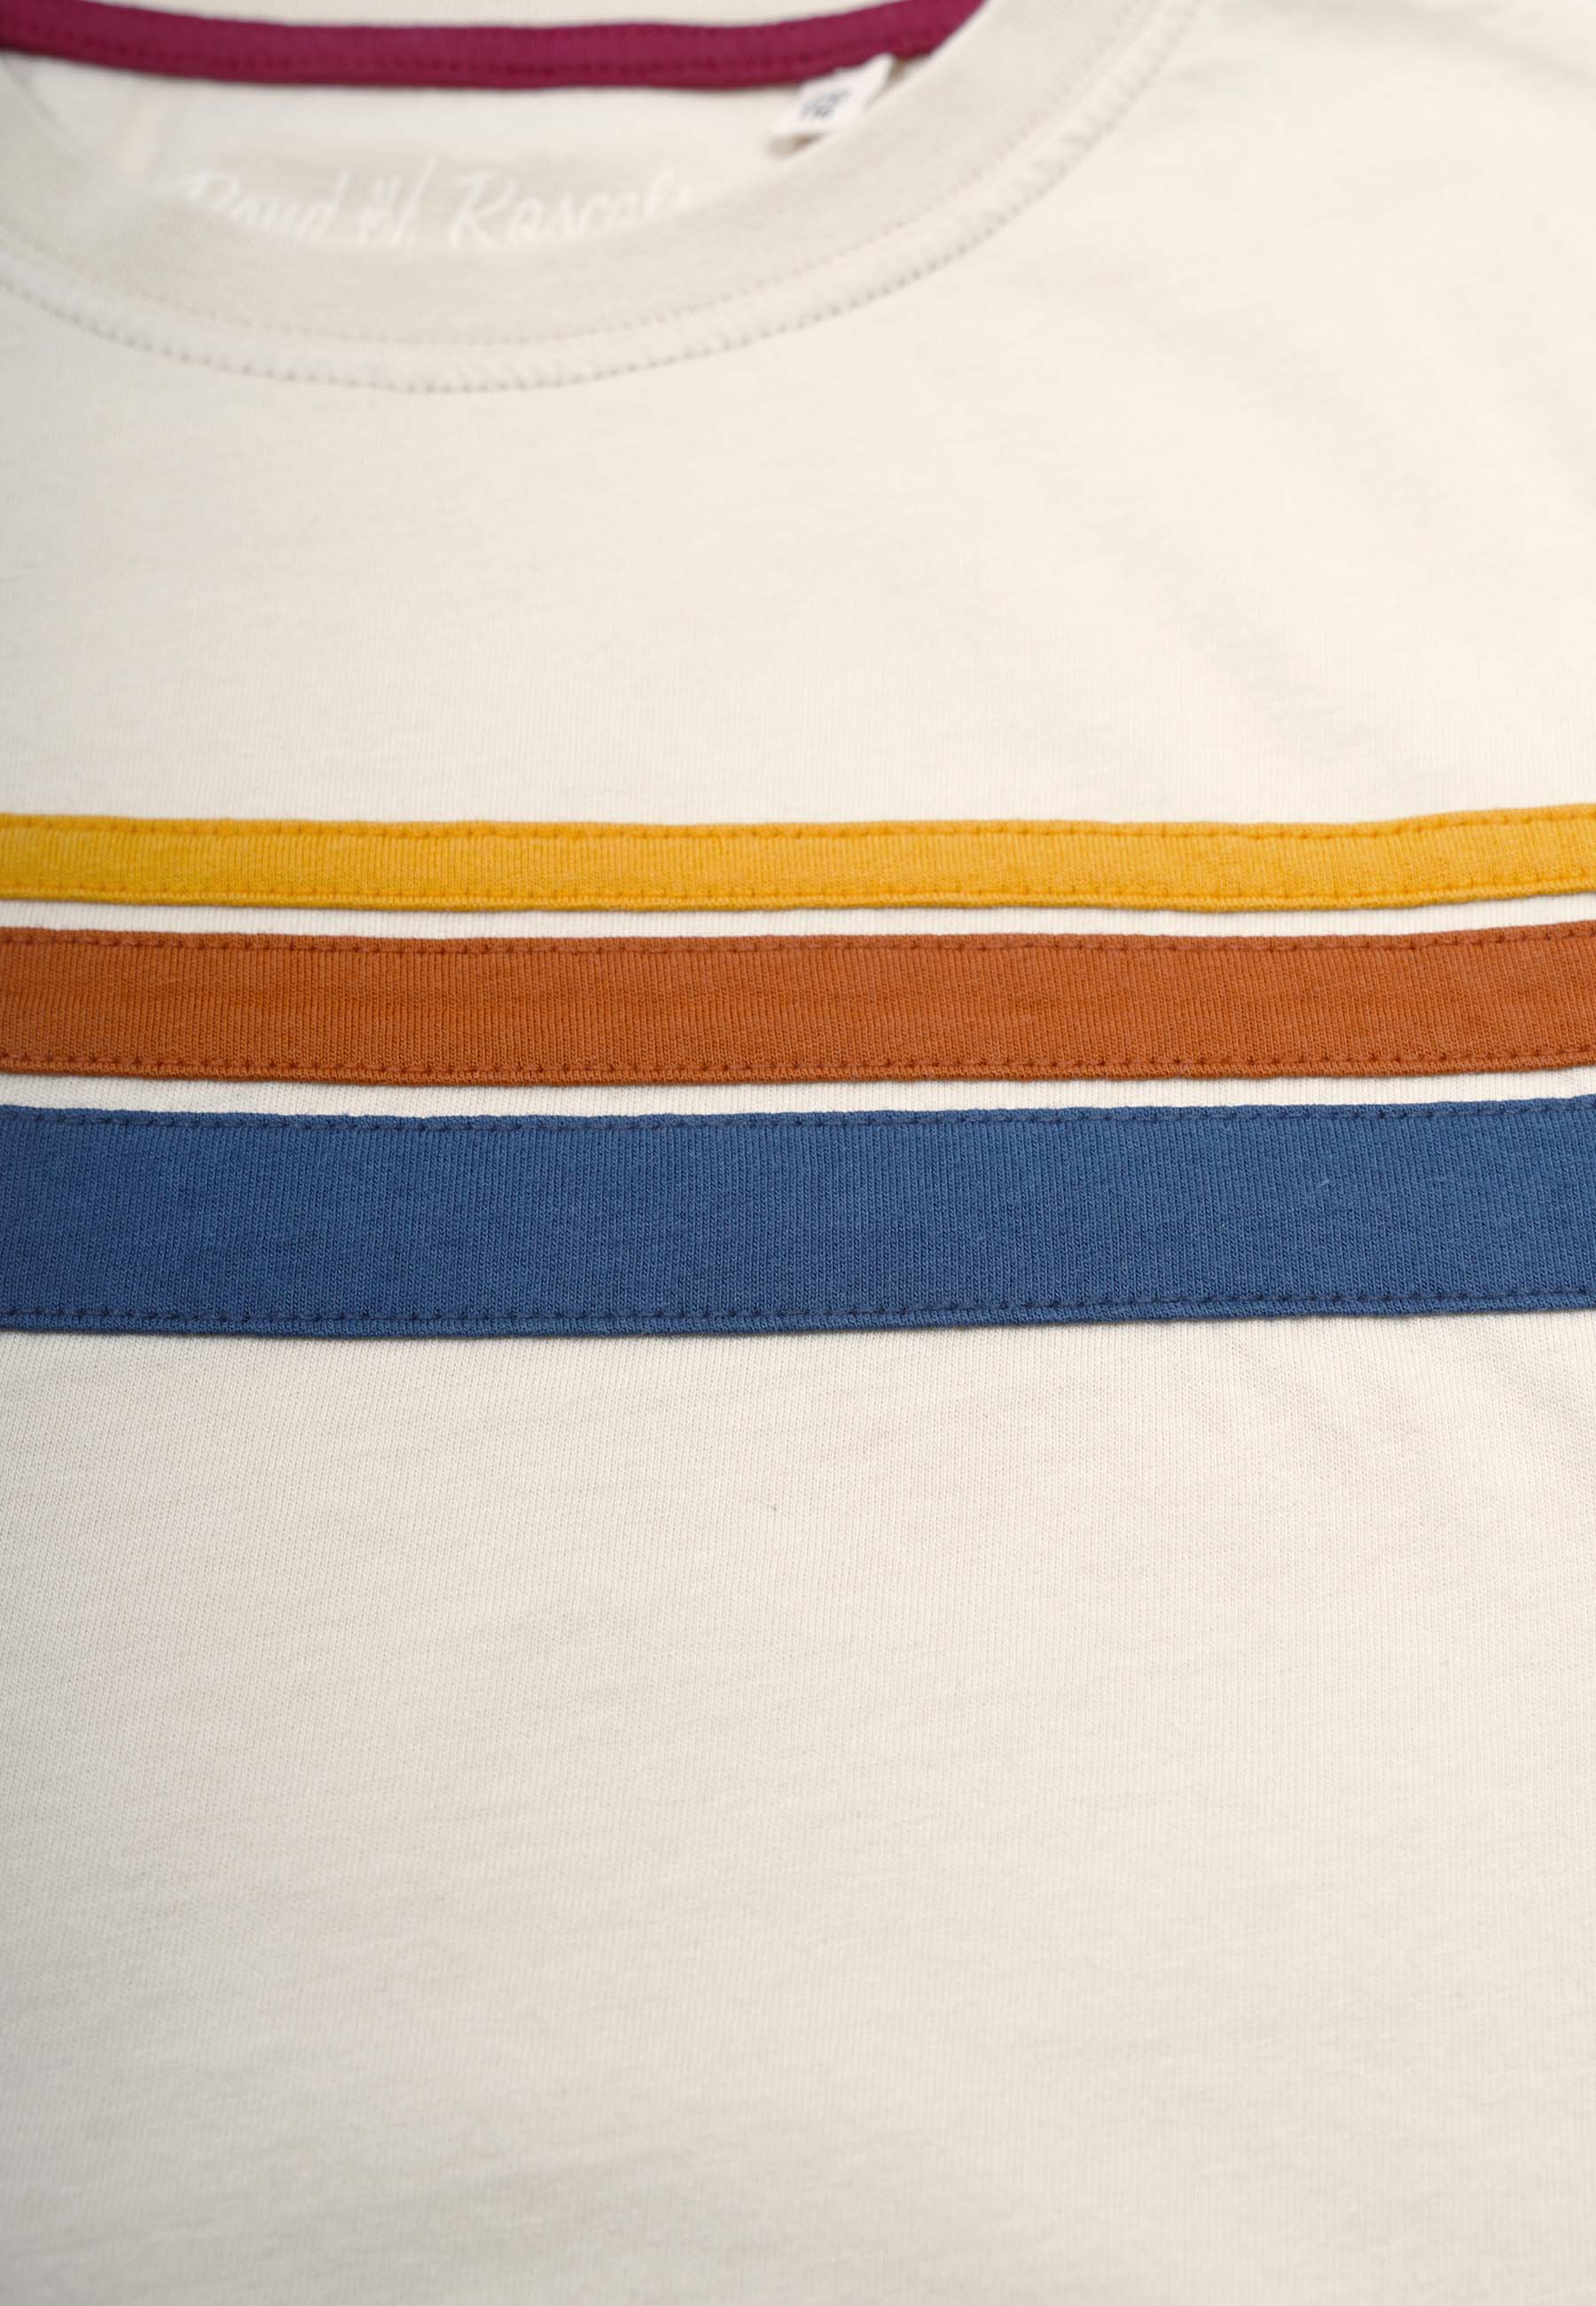 70th Stripes T-Shirt